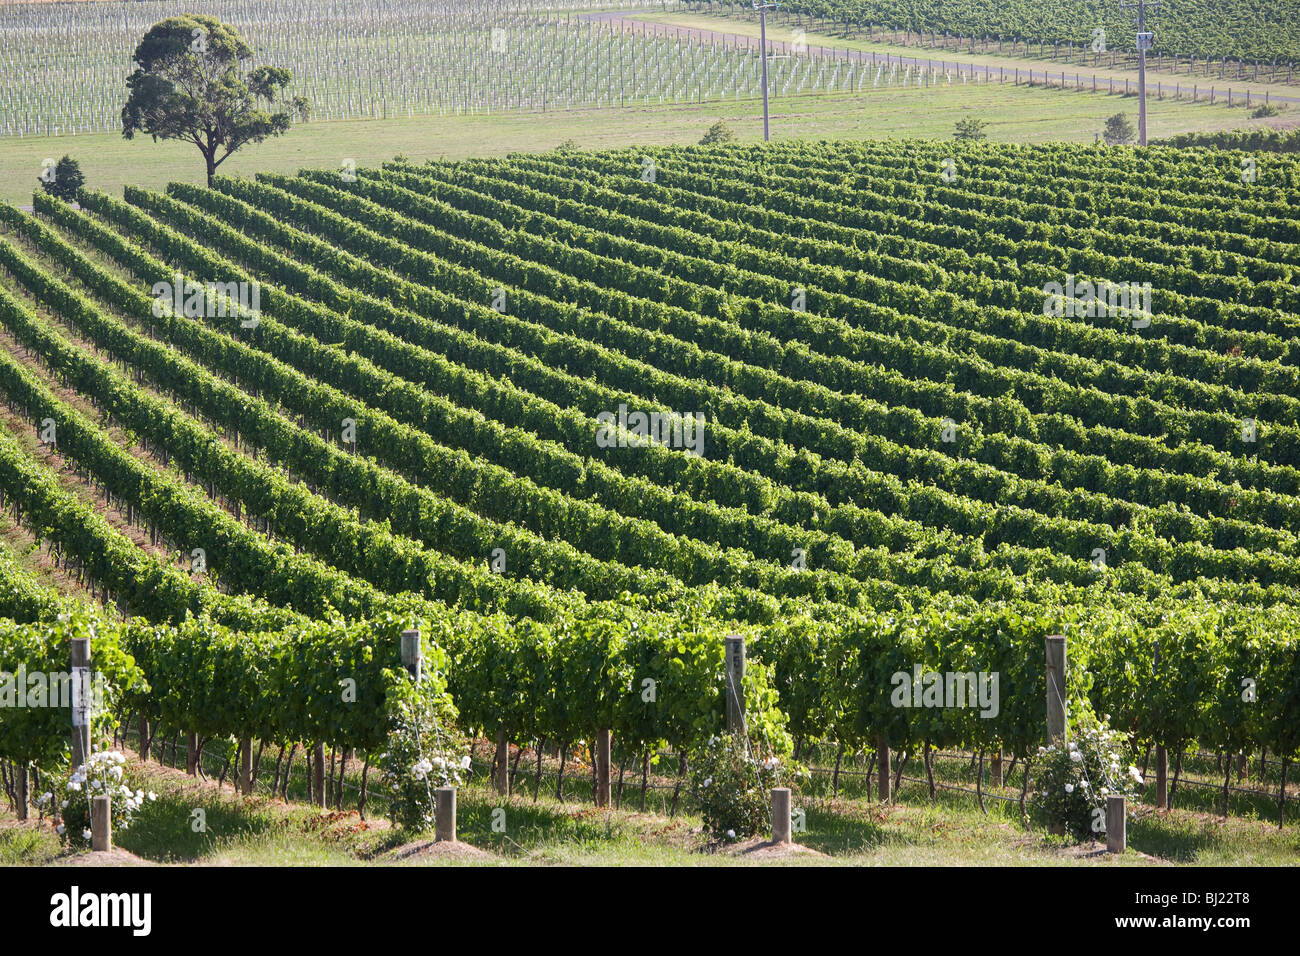 Vineyards at De Bortoli Vineyards, Yarra Valley, Victoria, Australia Stock Photo